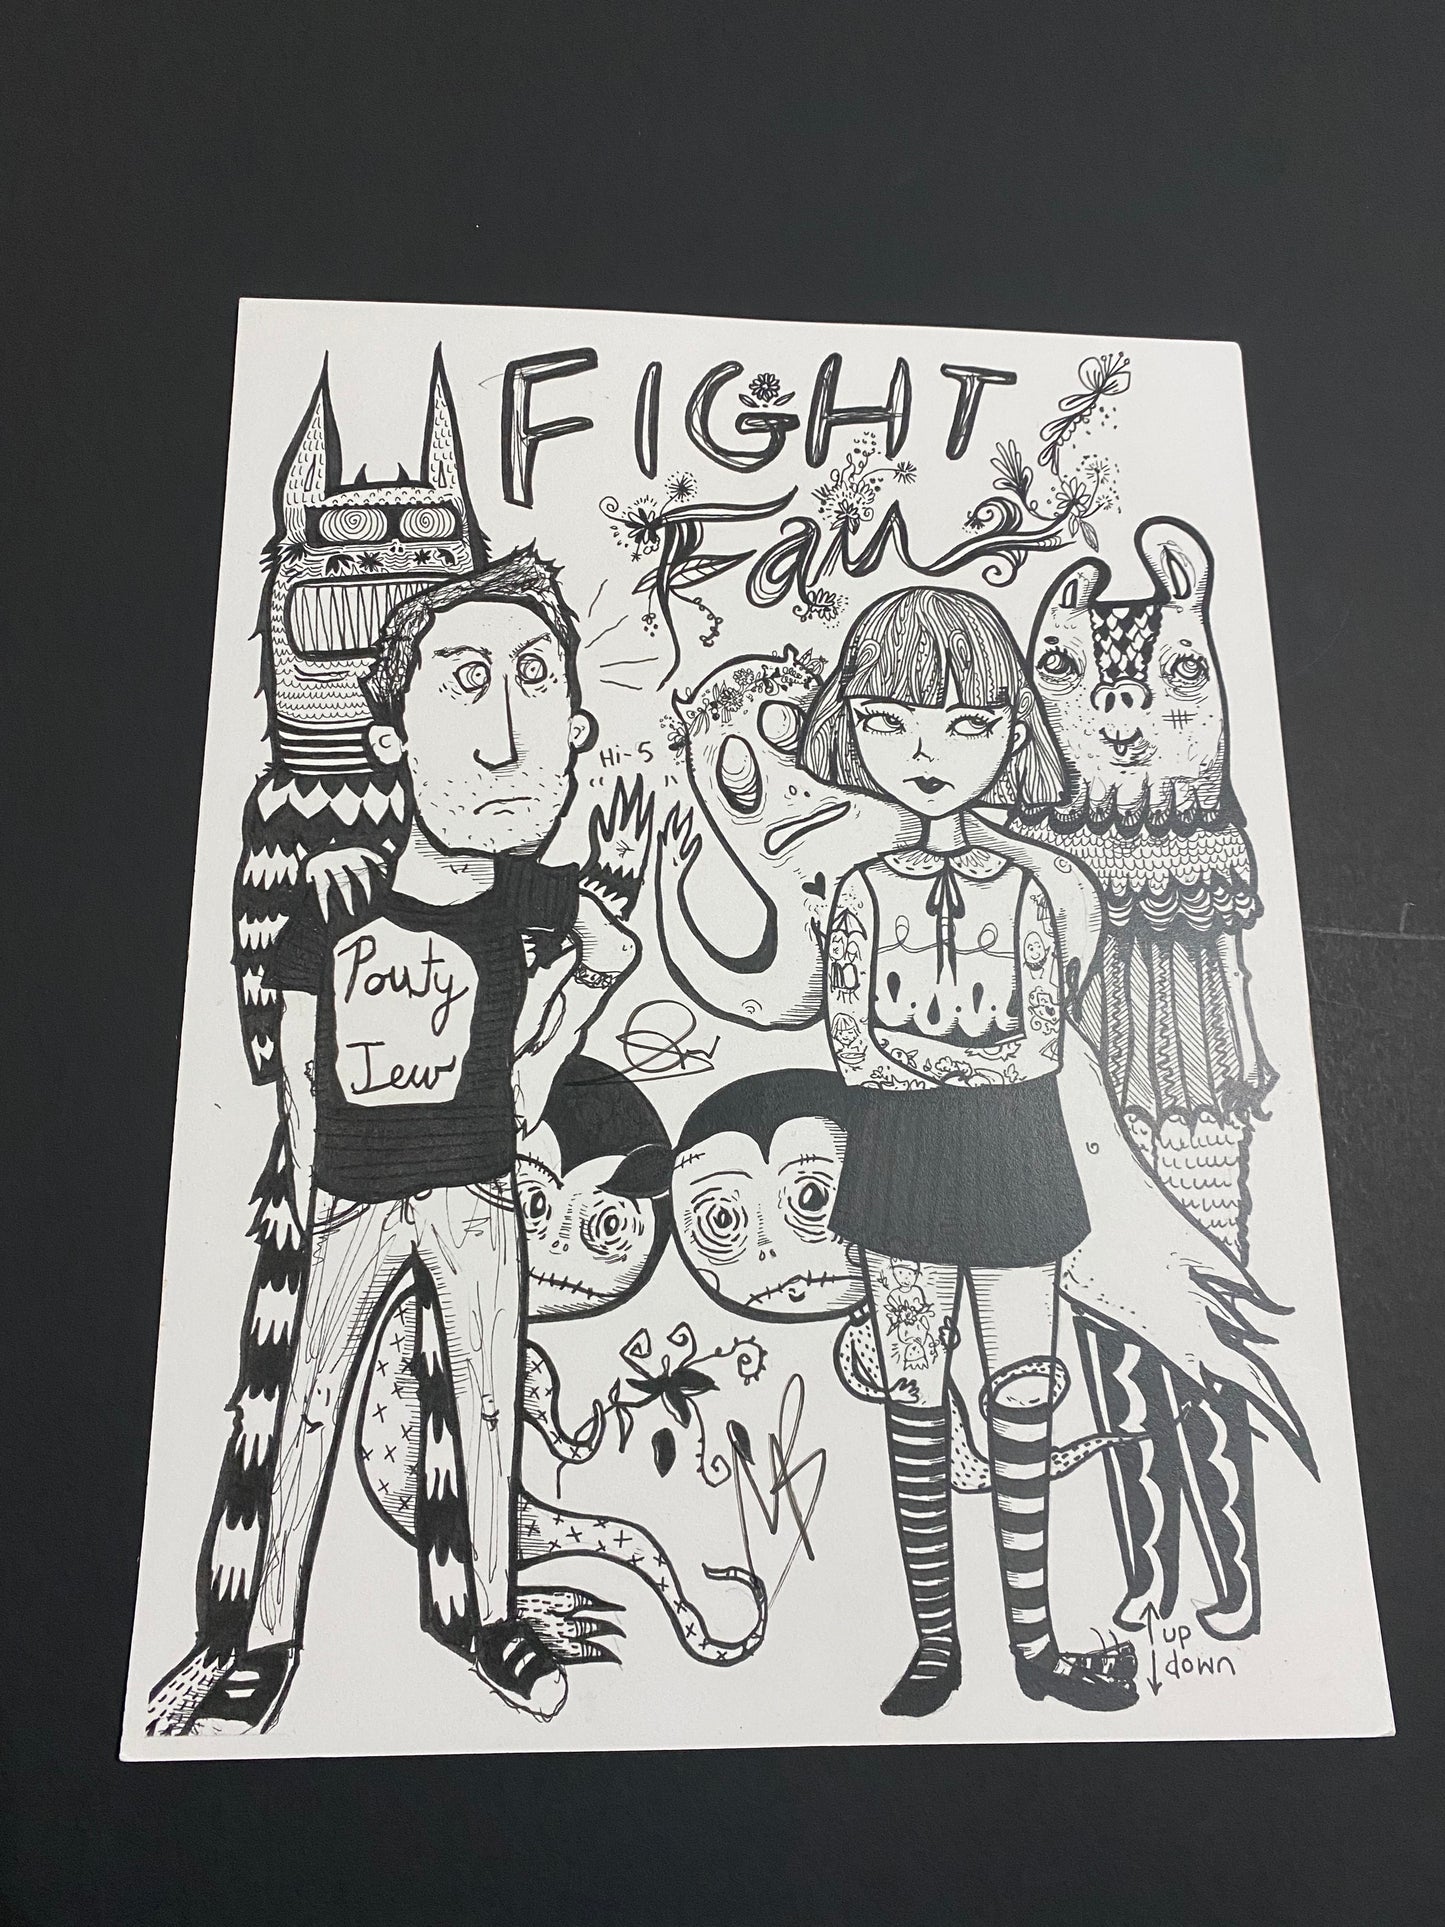 Perma Fight Fair Signed Print